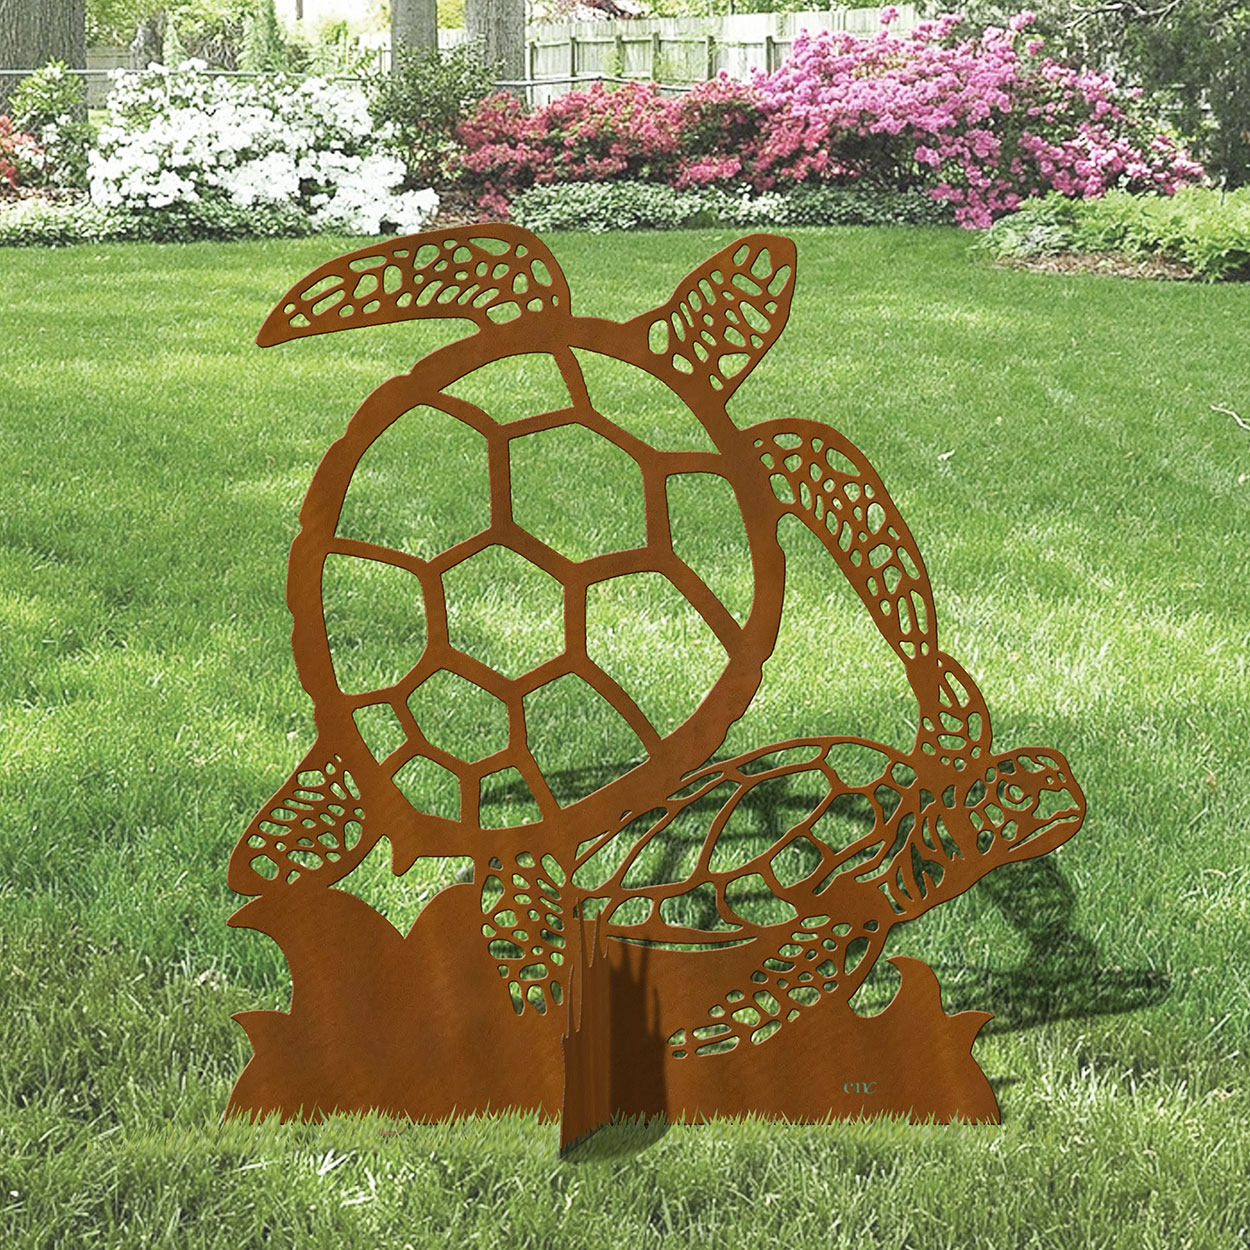 603256 - 36in H Sea Turtles Large Garden Statue Yard Art